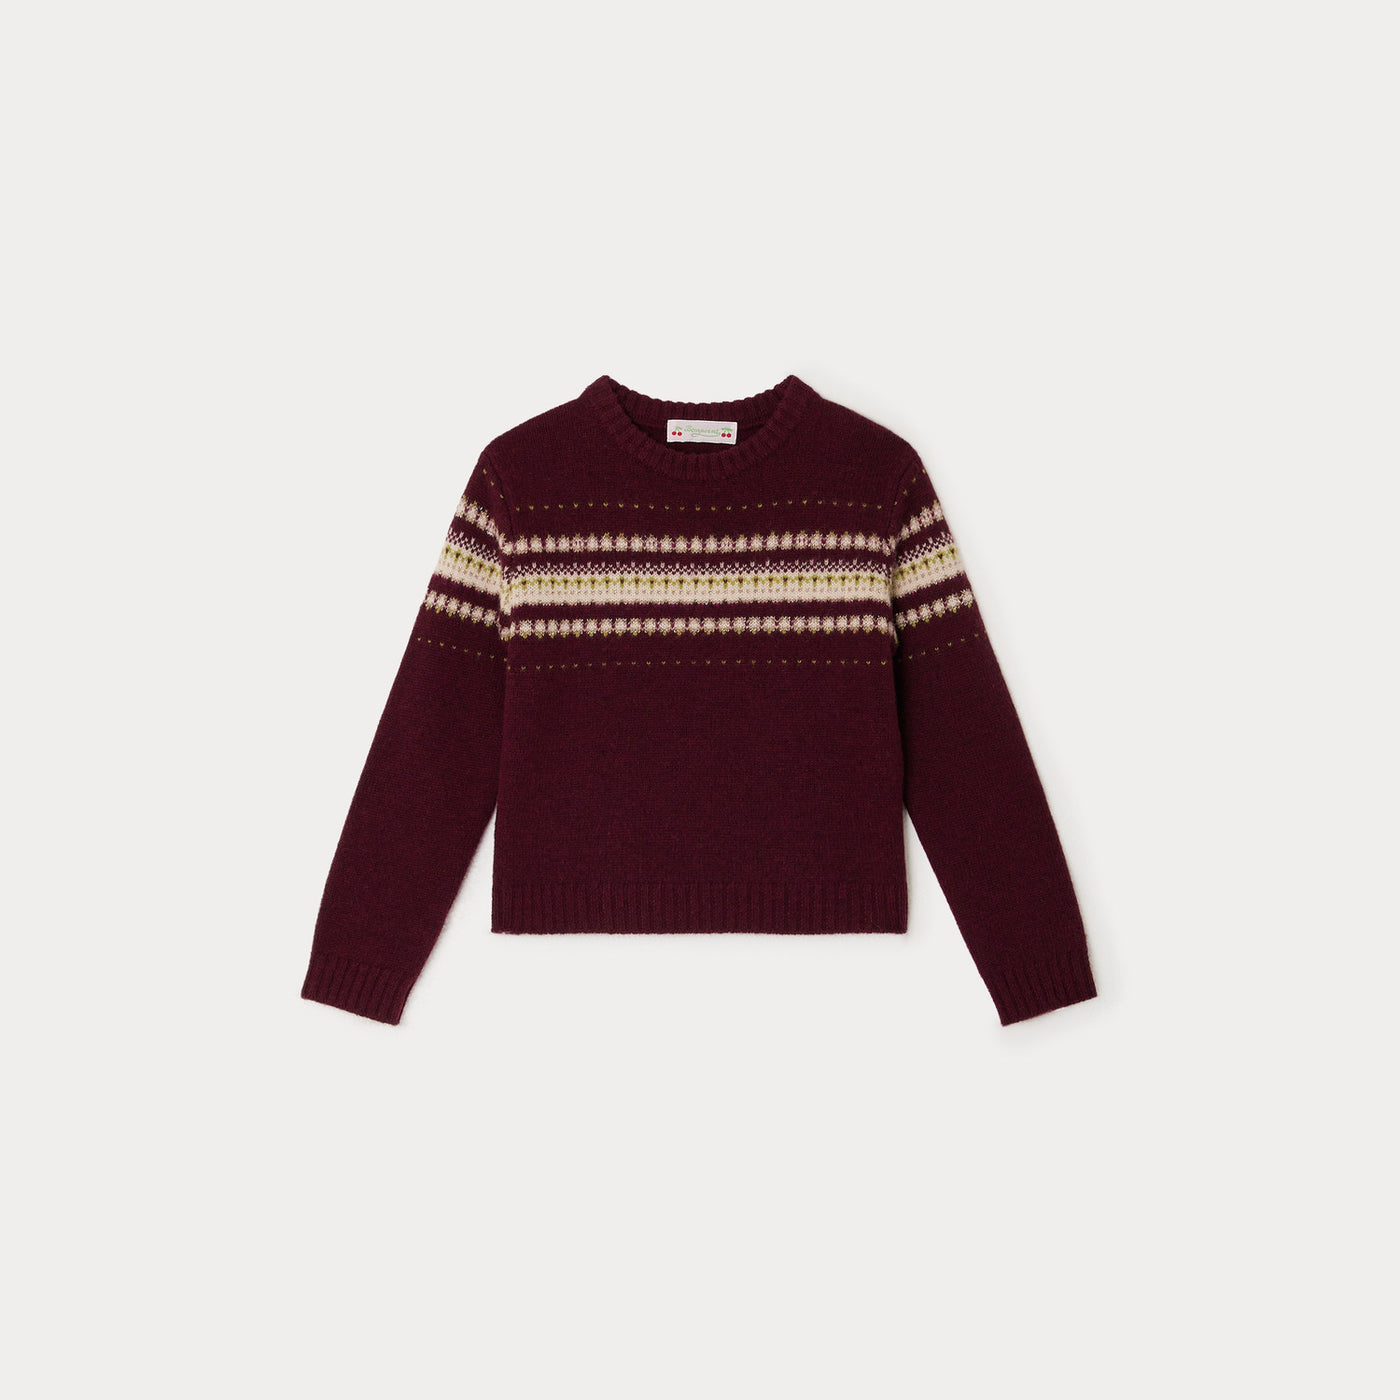 Branda Sweater burgundy